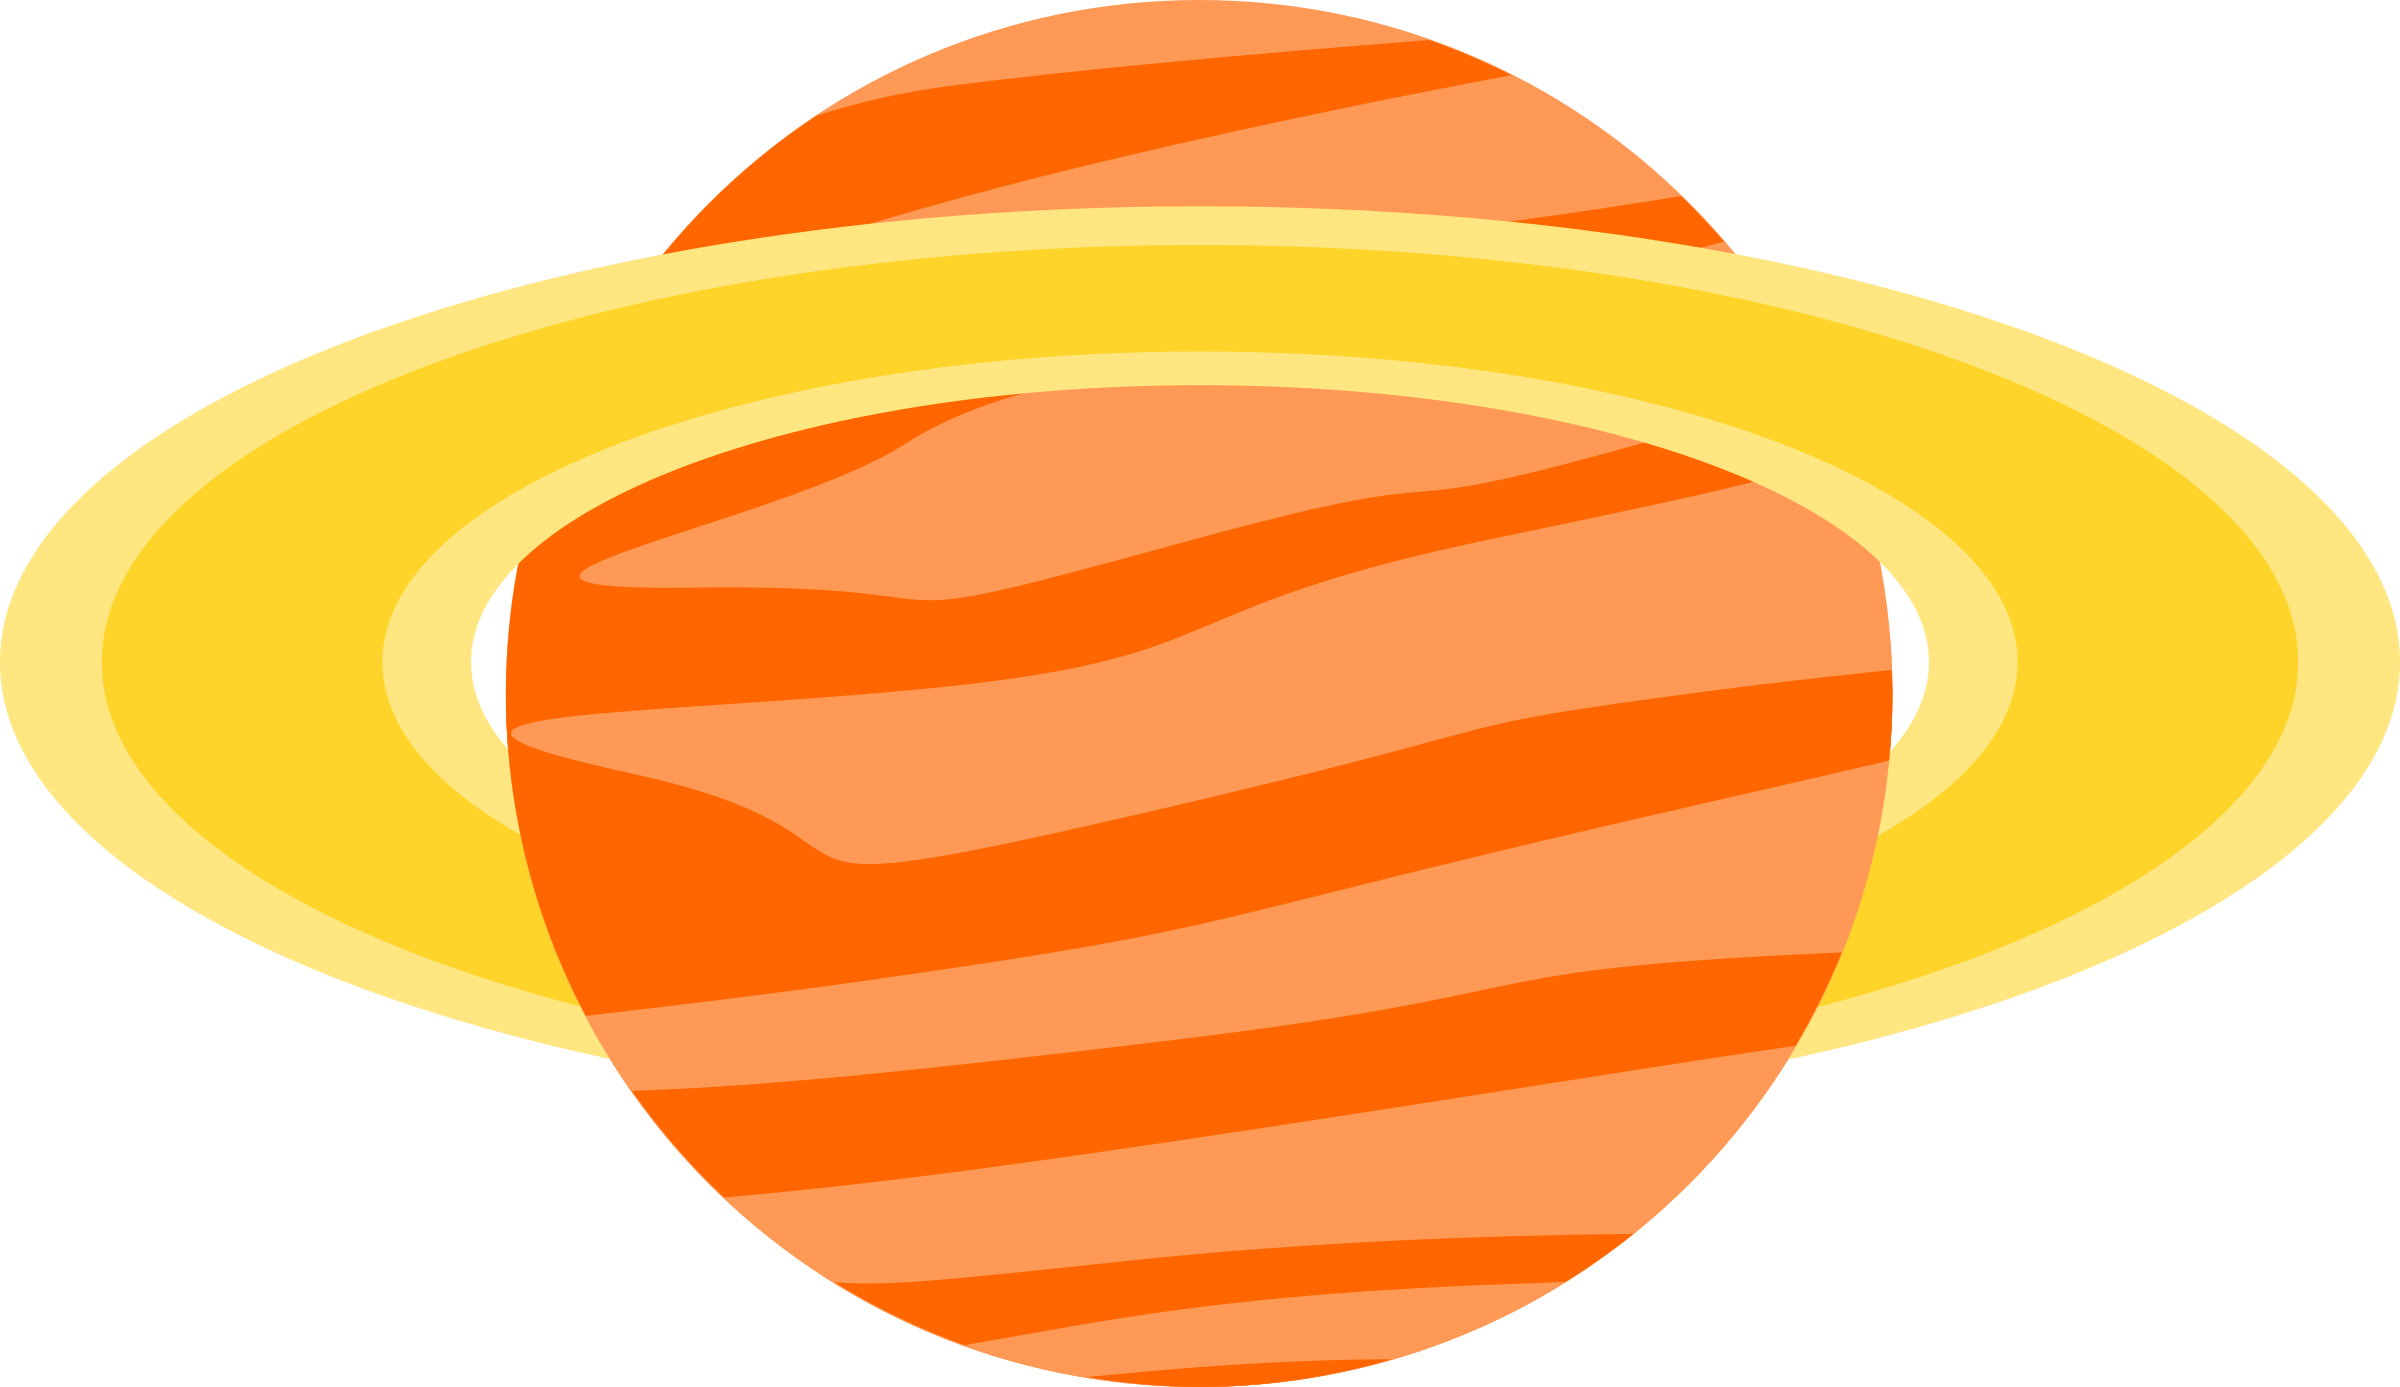 Saturn Illustration Vector